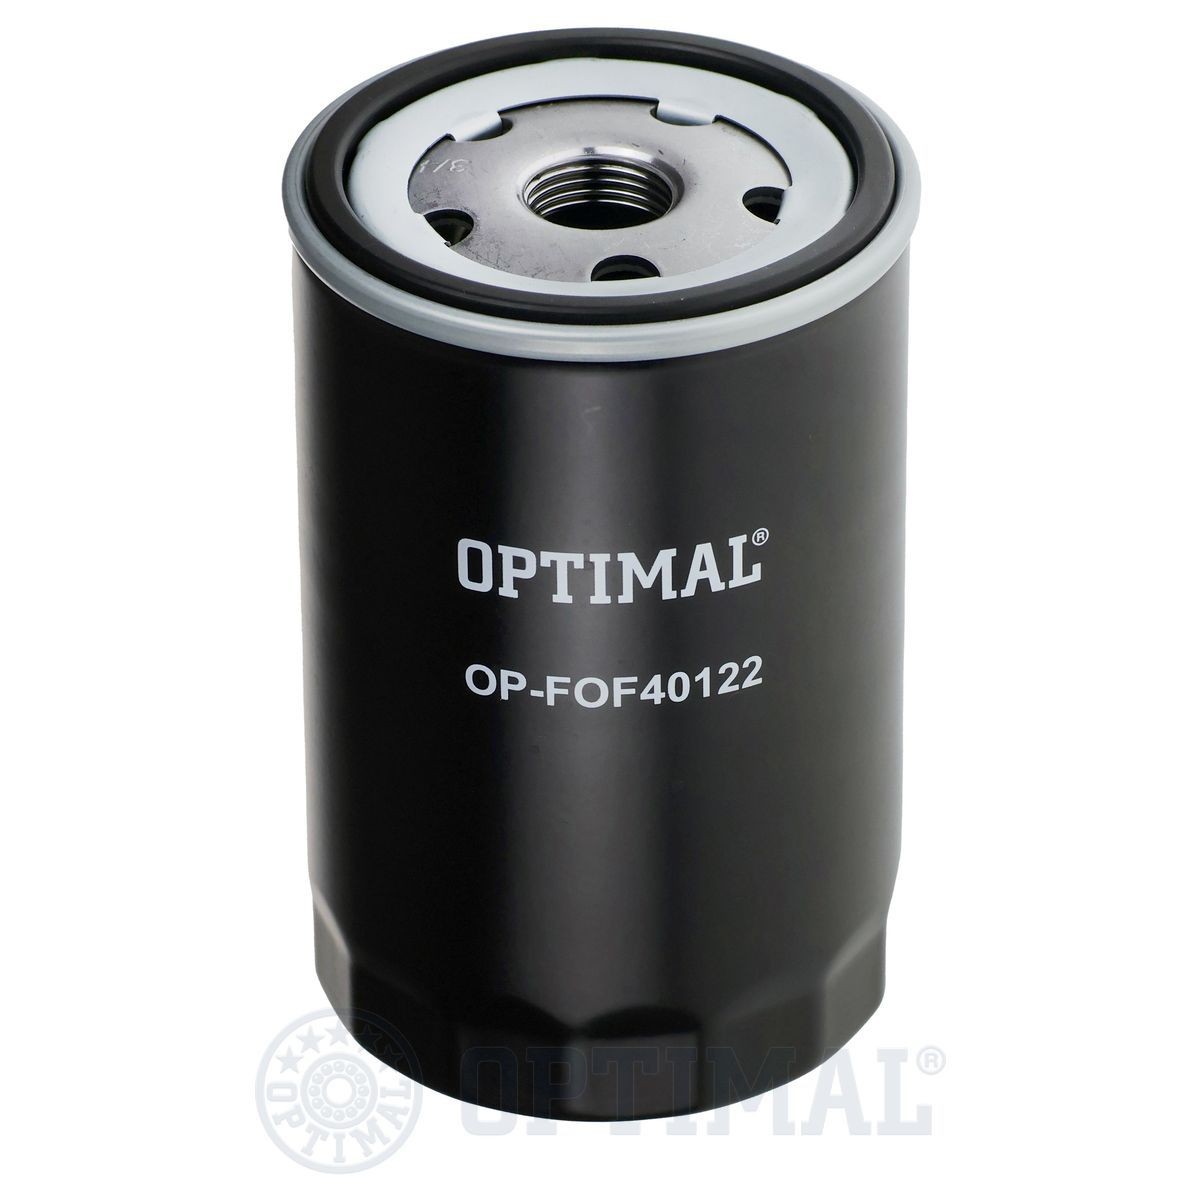 OPTIMAL OP-FOF40122 Oil filter 11-42-1-287-836